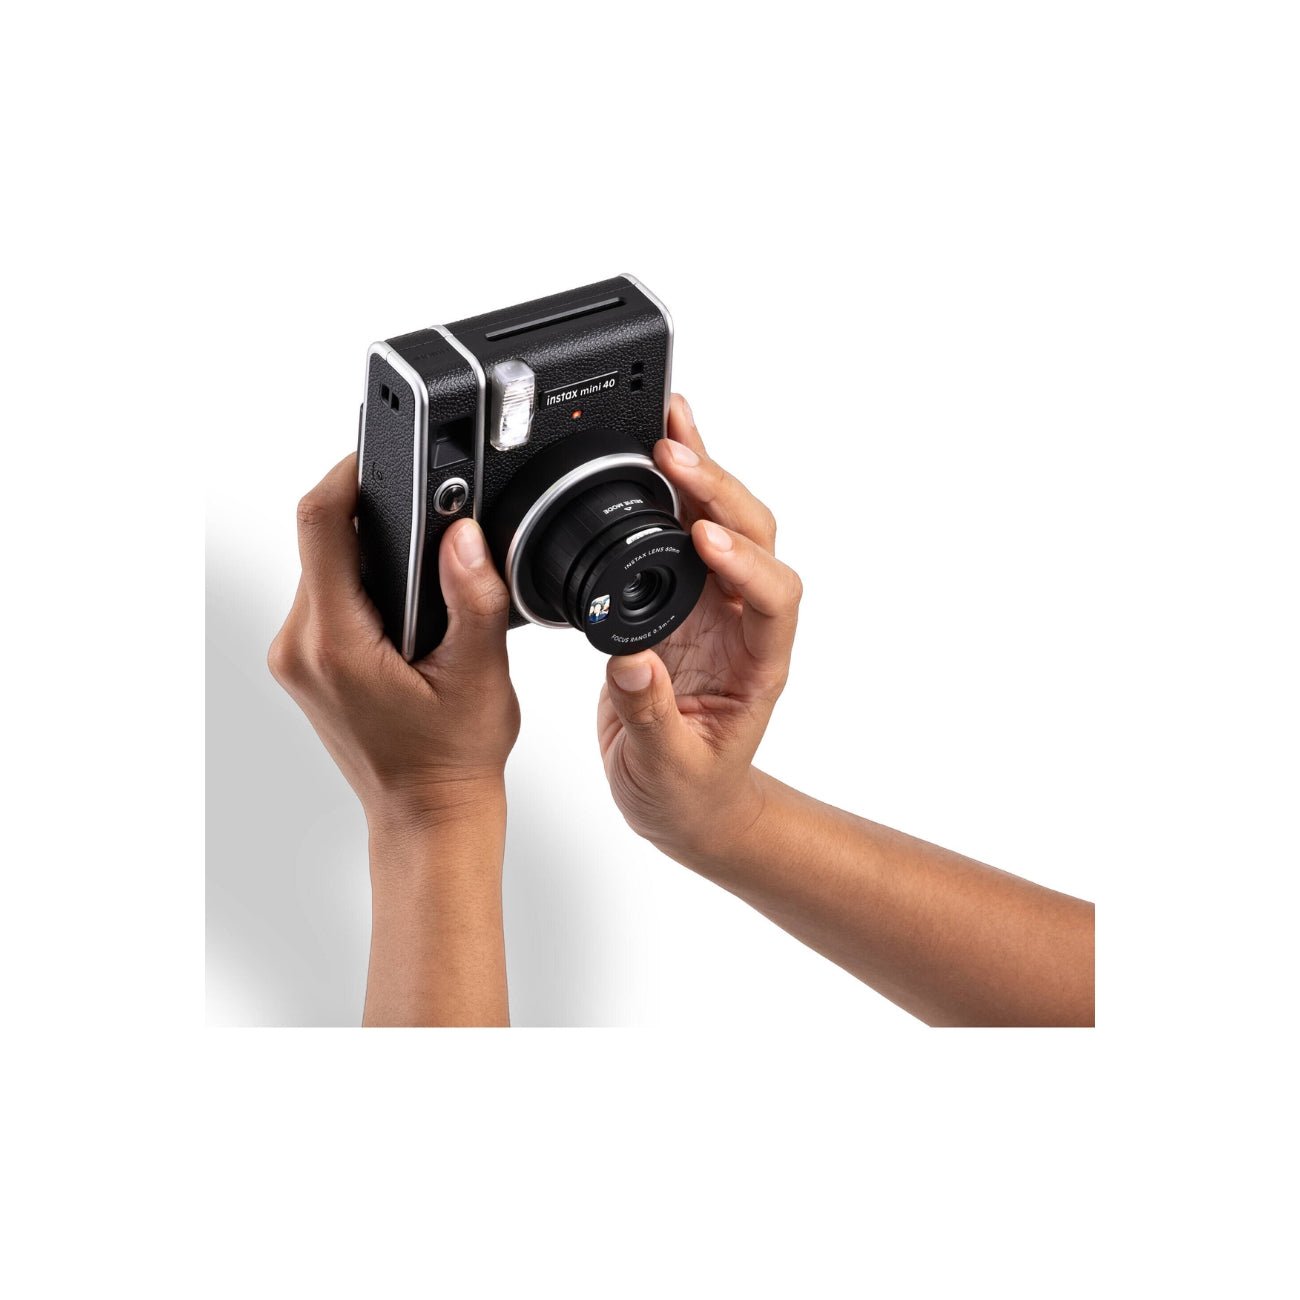 Fujifilm Instax Mini 40 Instant Film Camera being used